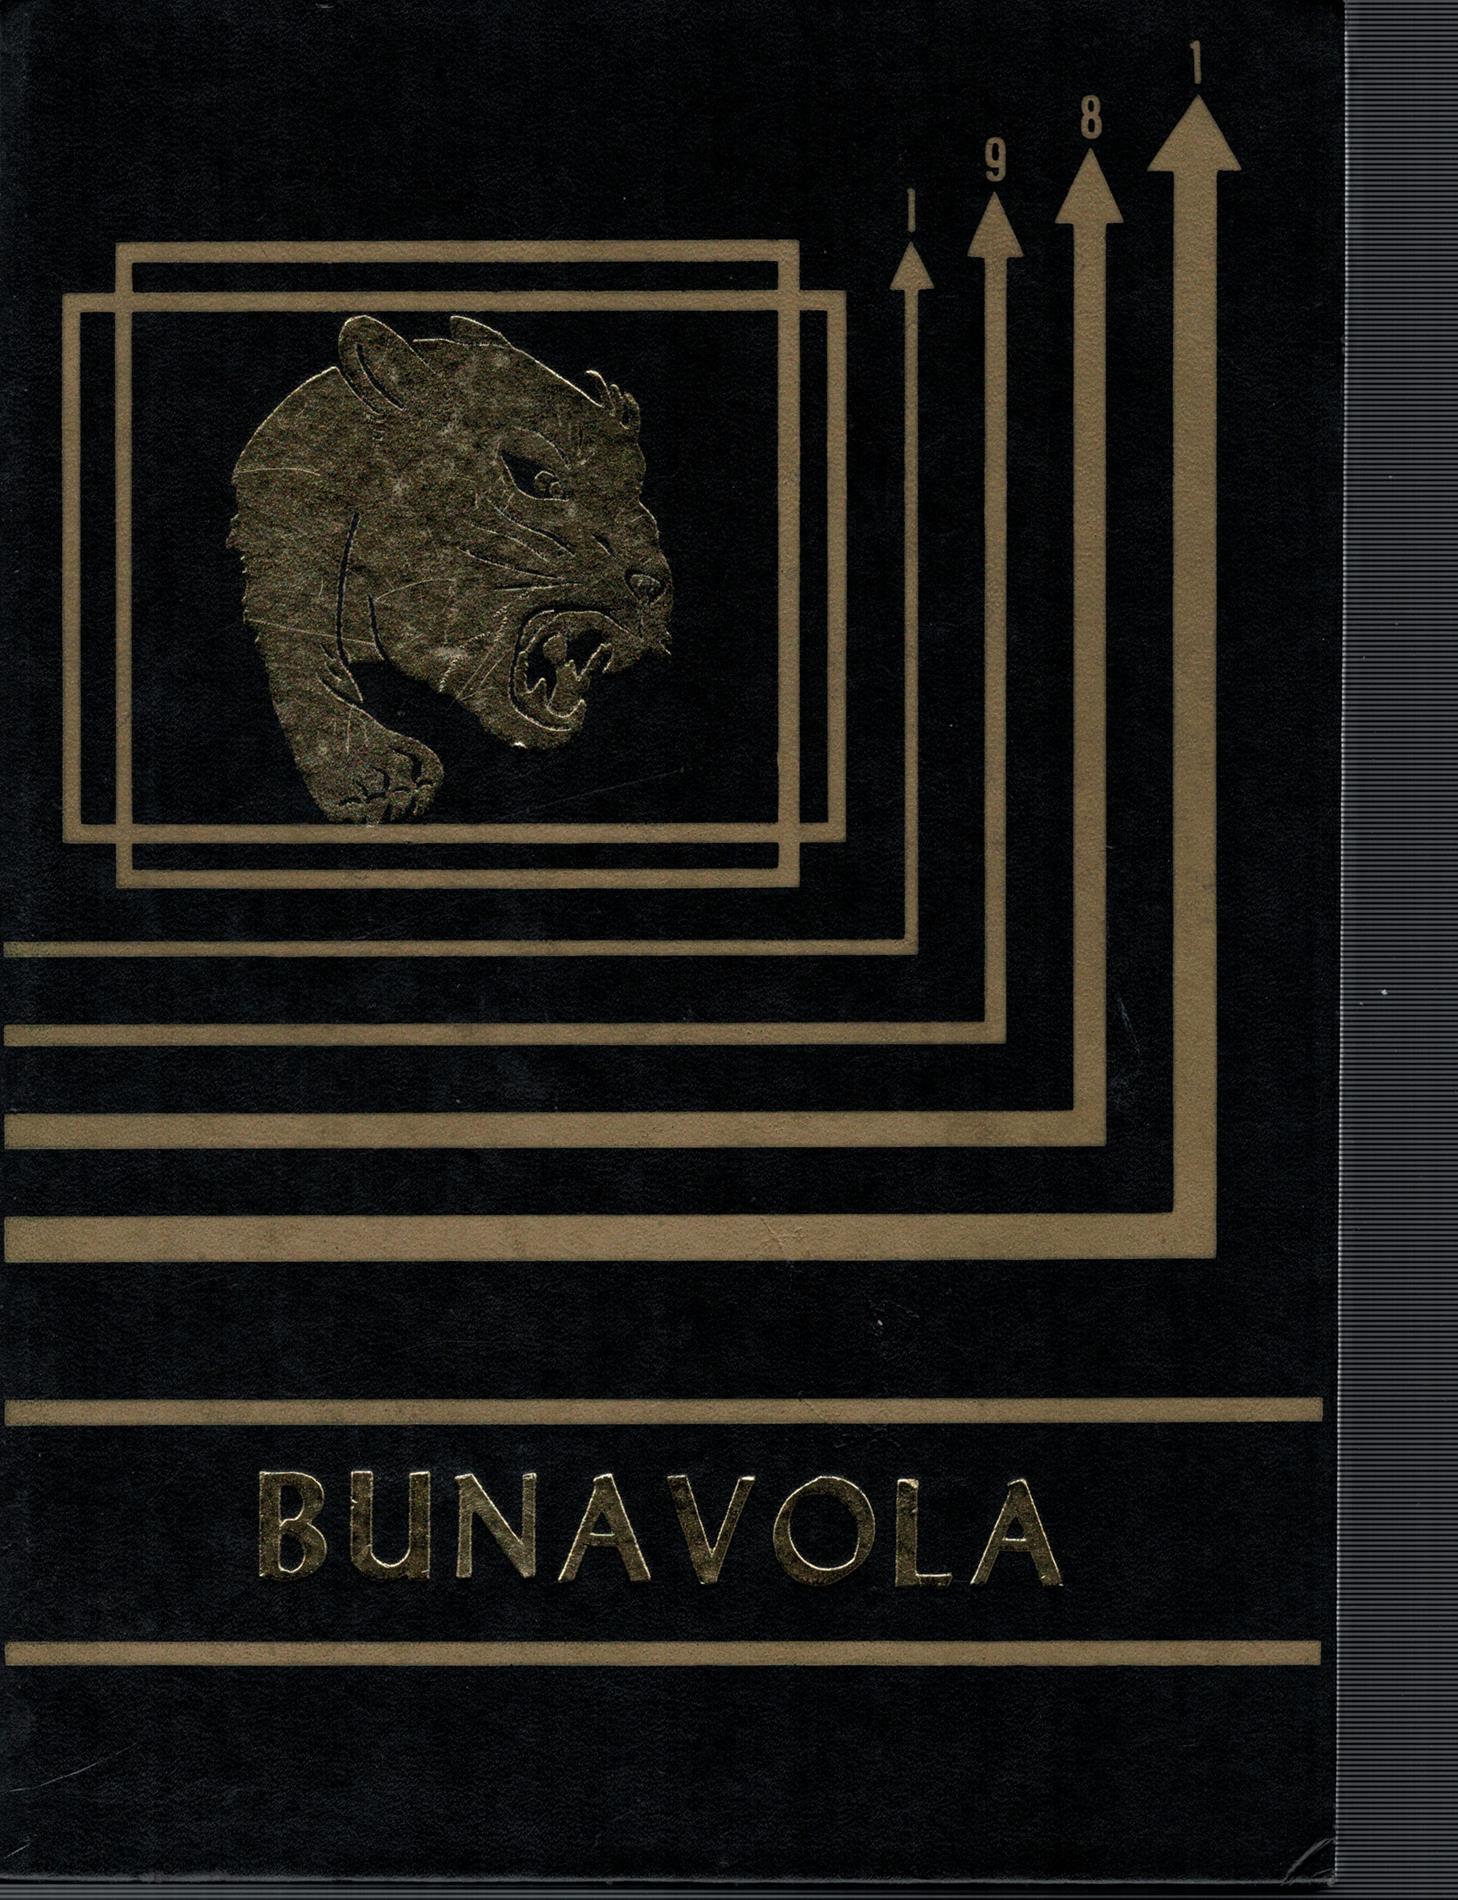 1981 Bunavola